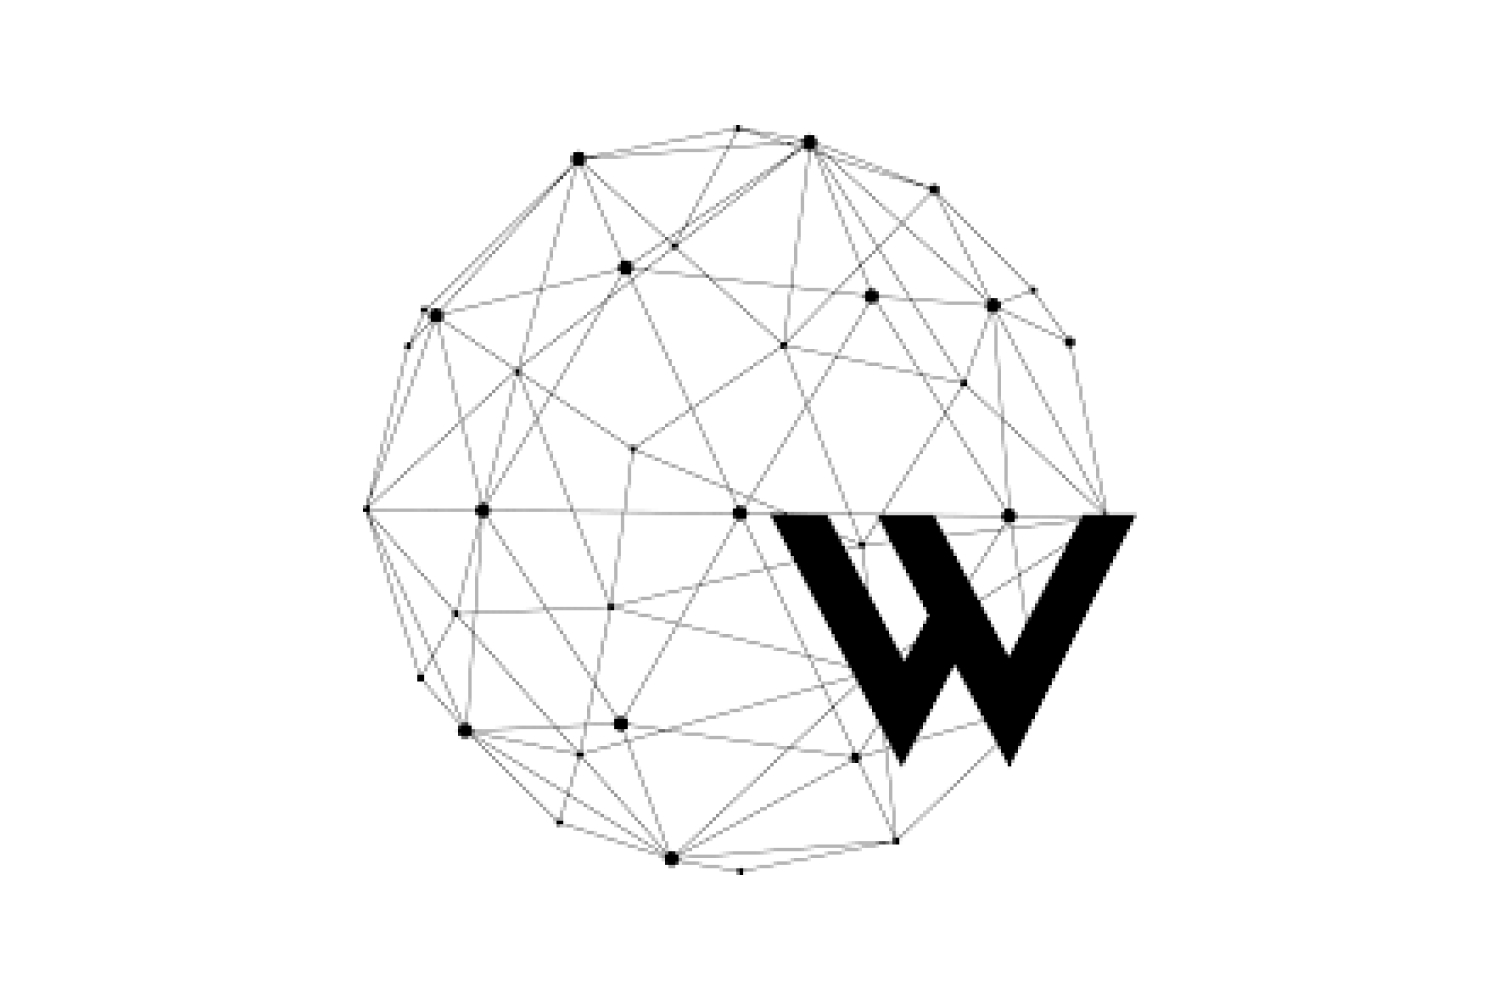 Women in AI logo